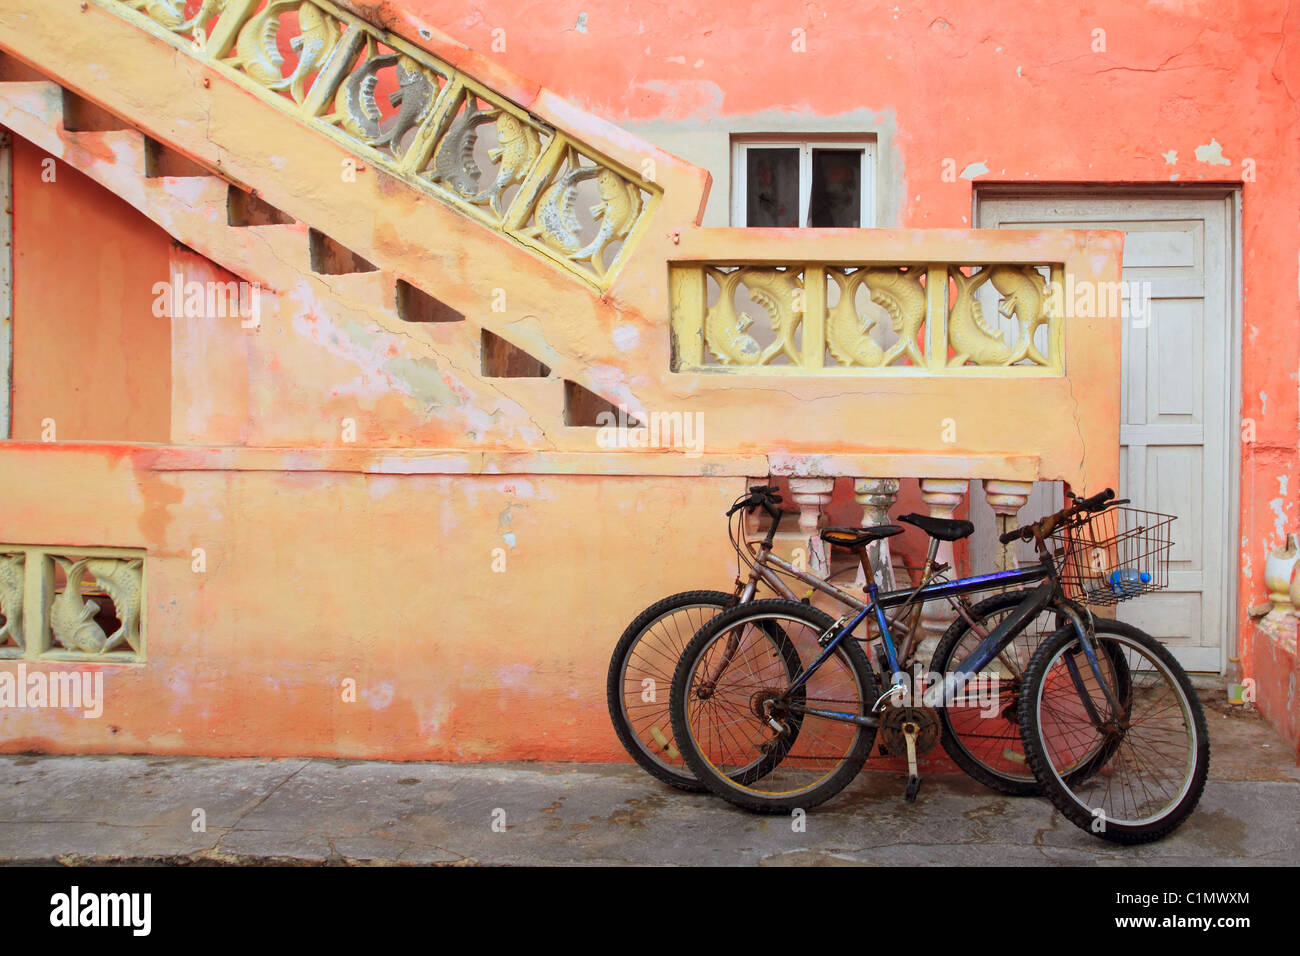 bicycles on grunge tropical Caribbean orange yellow facade Mexico Stock Photo